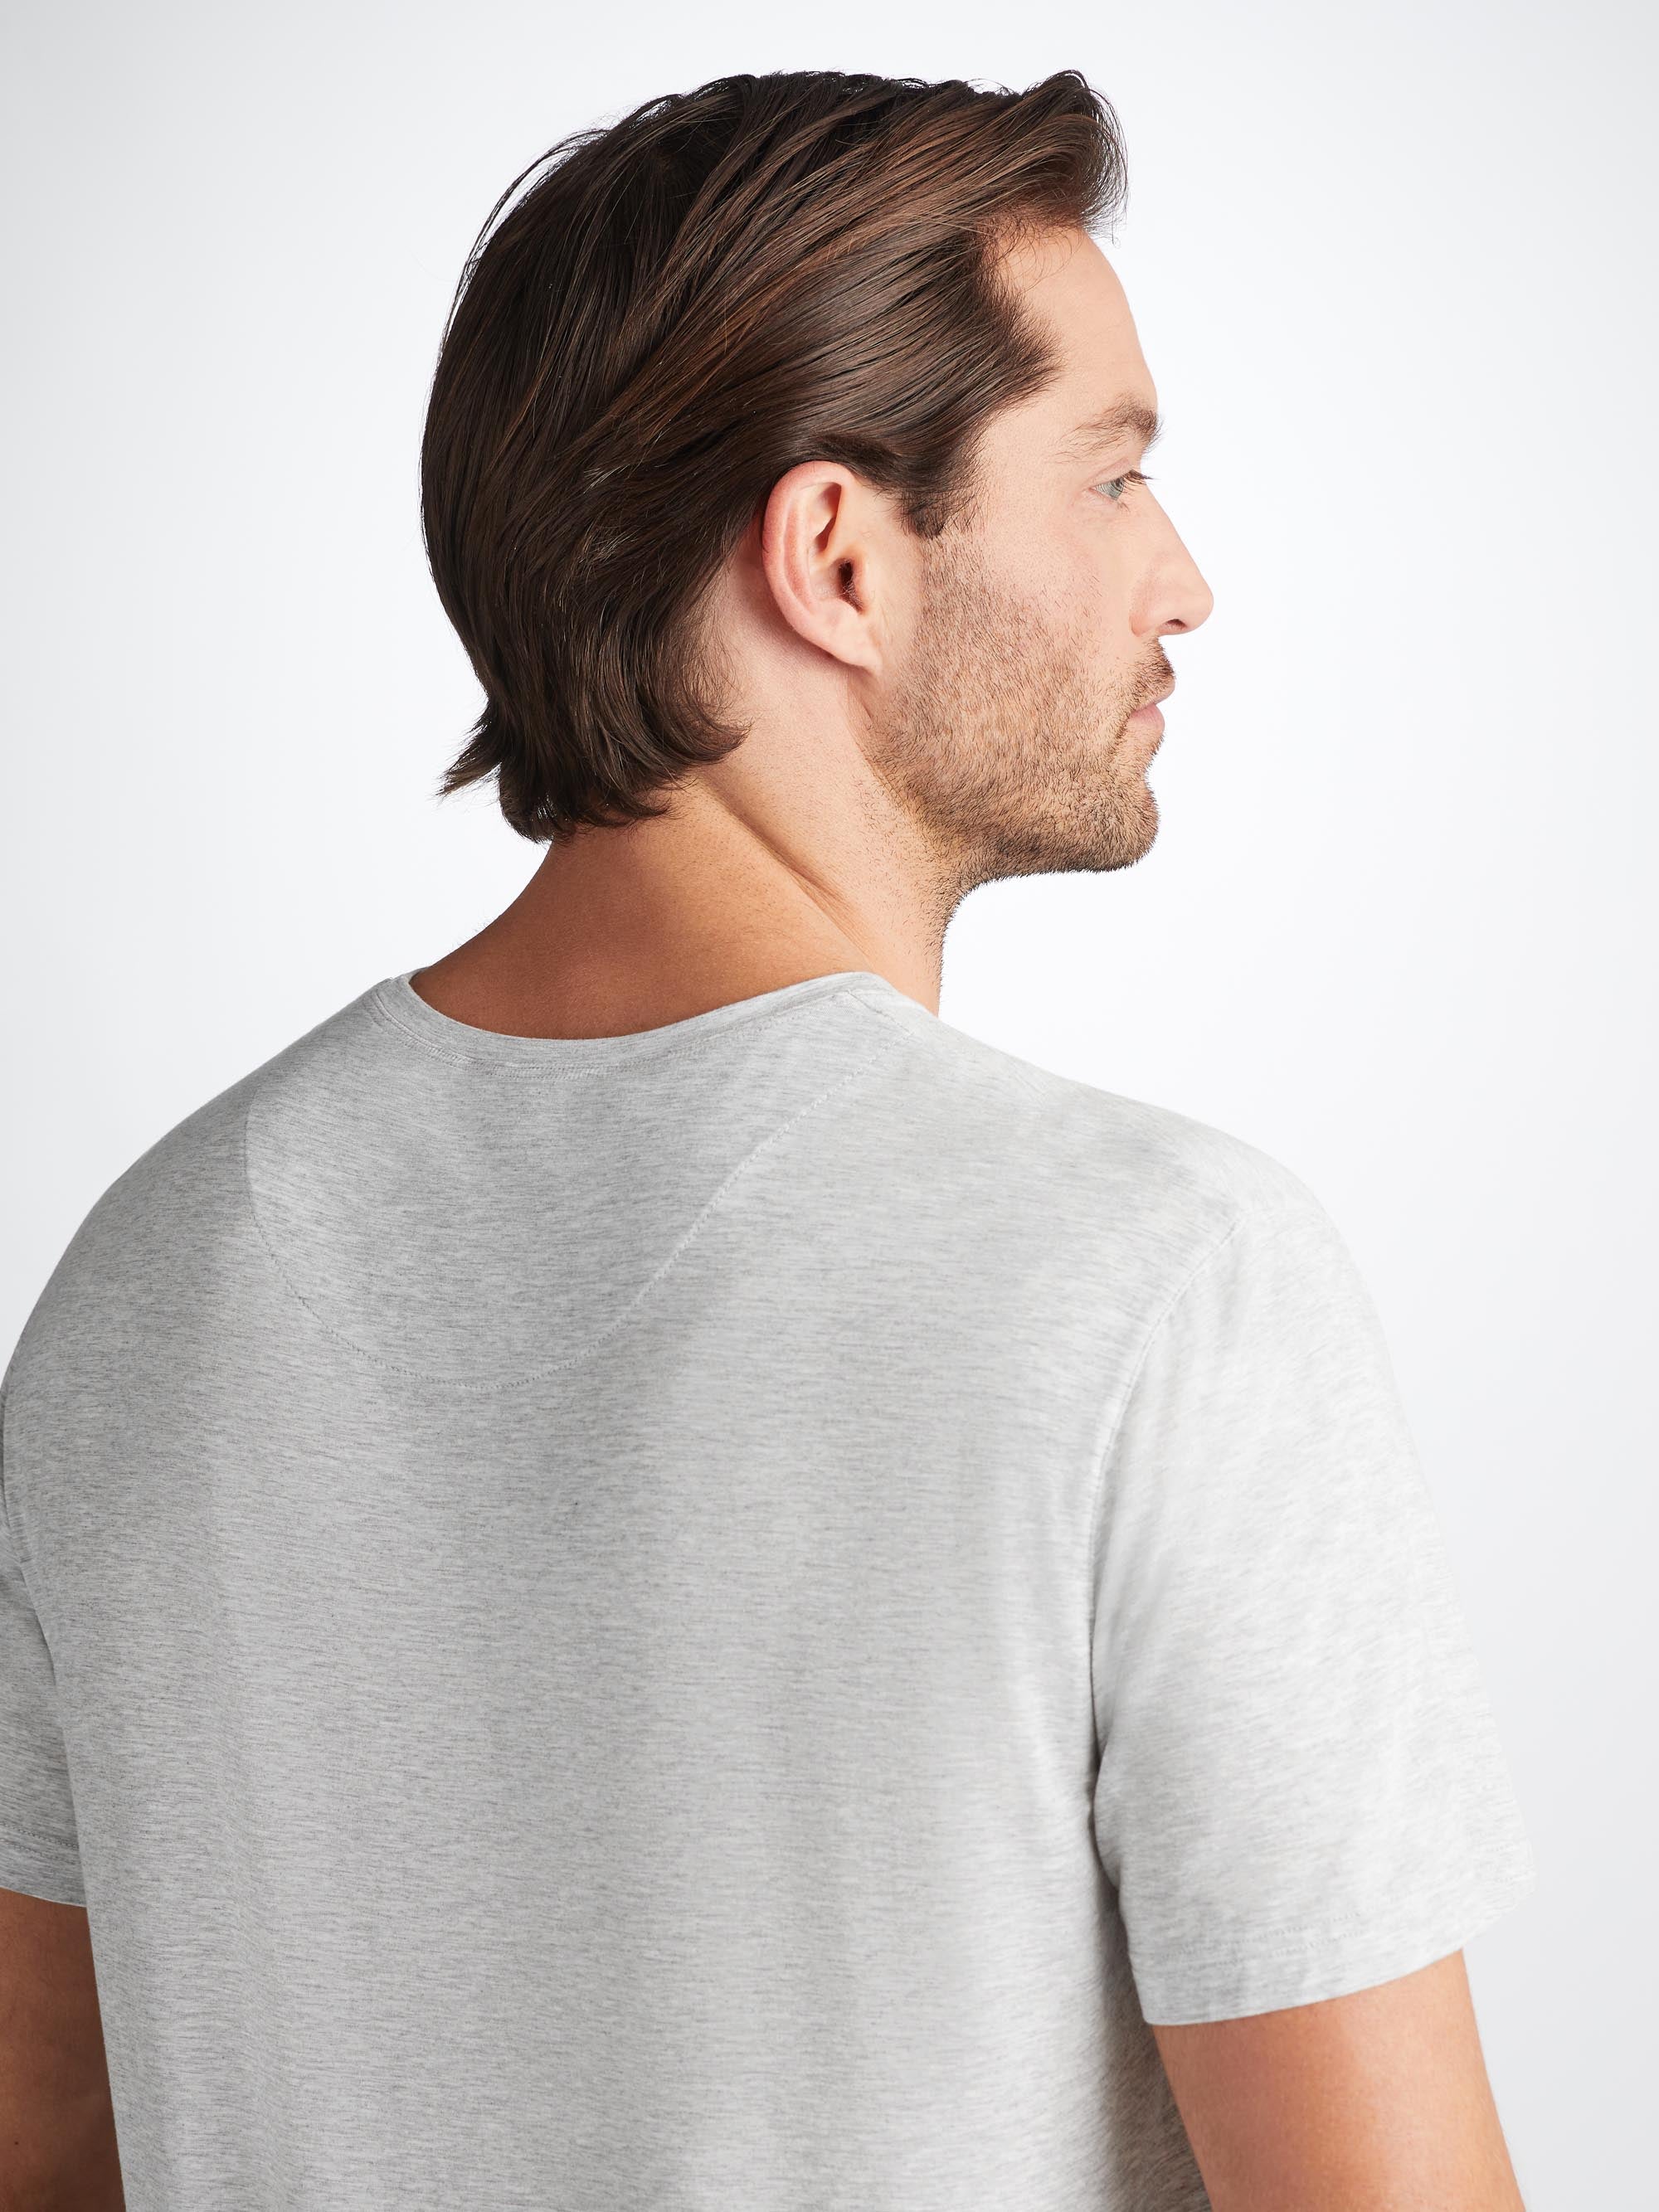 Men's T-Shirt Ethan Micro Modal Stretch Silver Marl